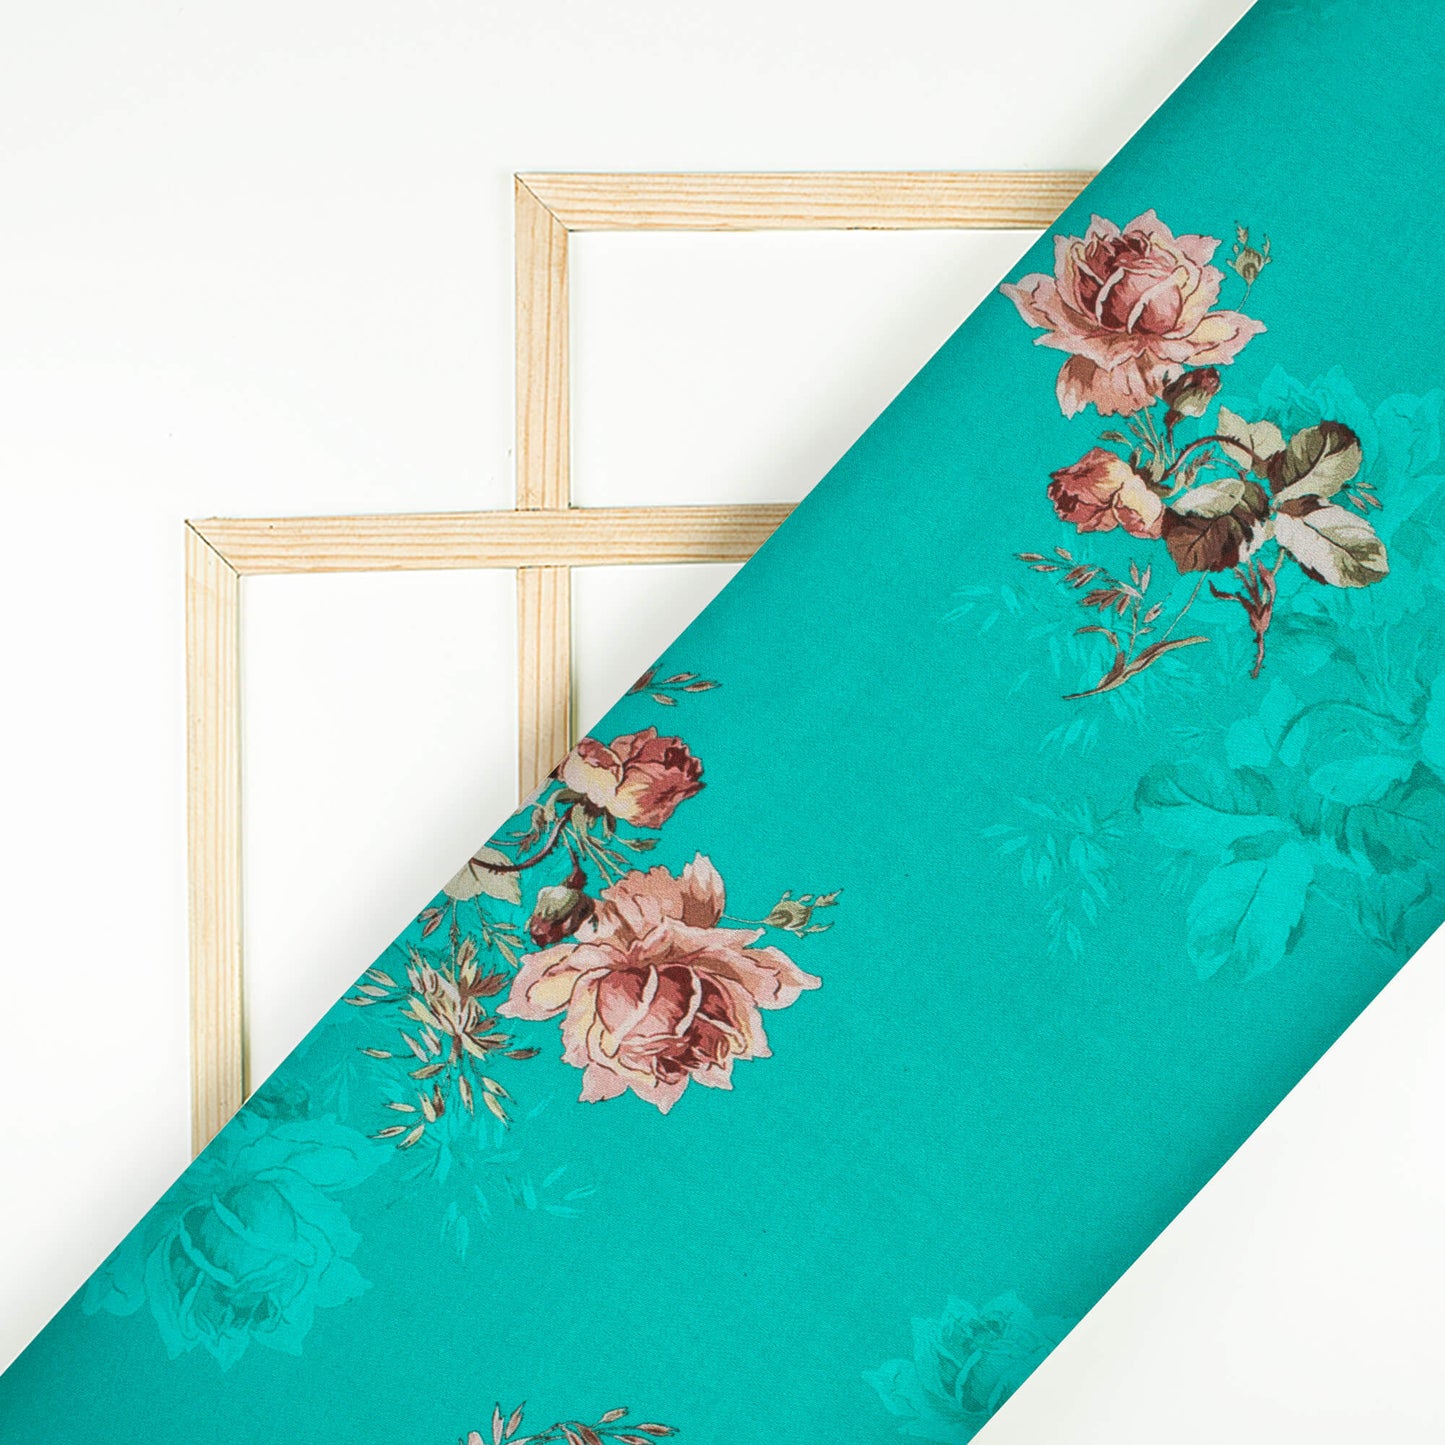 Teal Blue And Rosewood Pink Floral Pattern Digital Print Premium Lush Satin Fabric